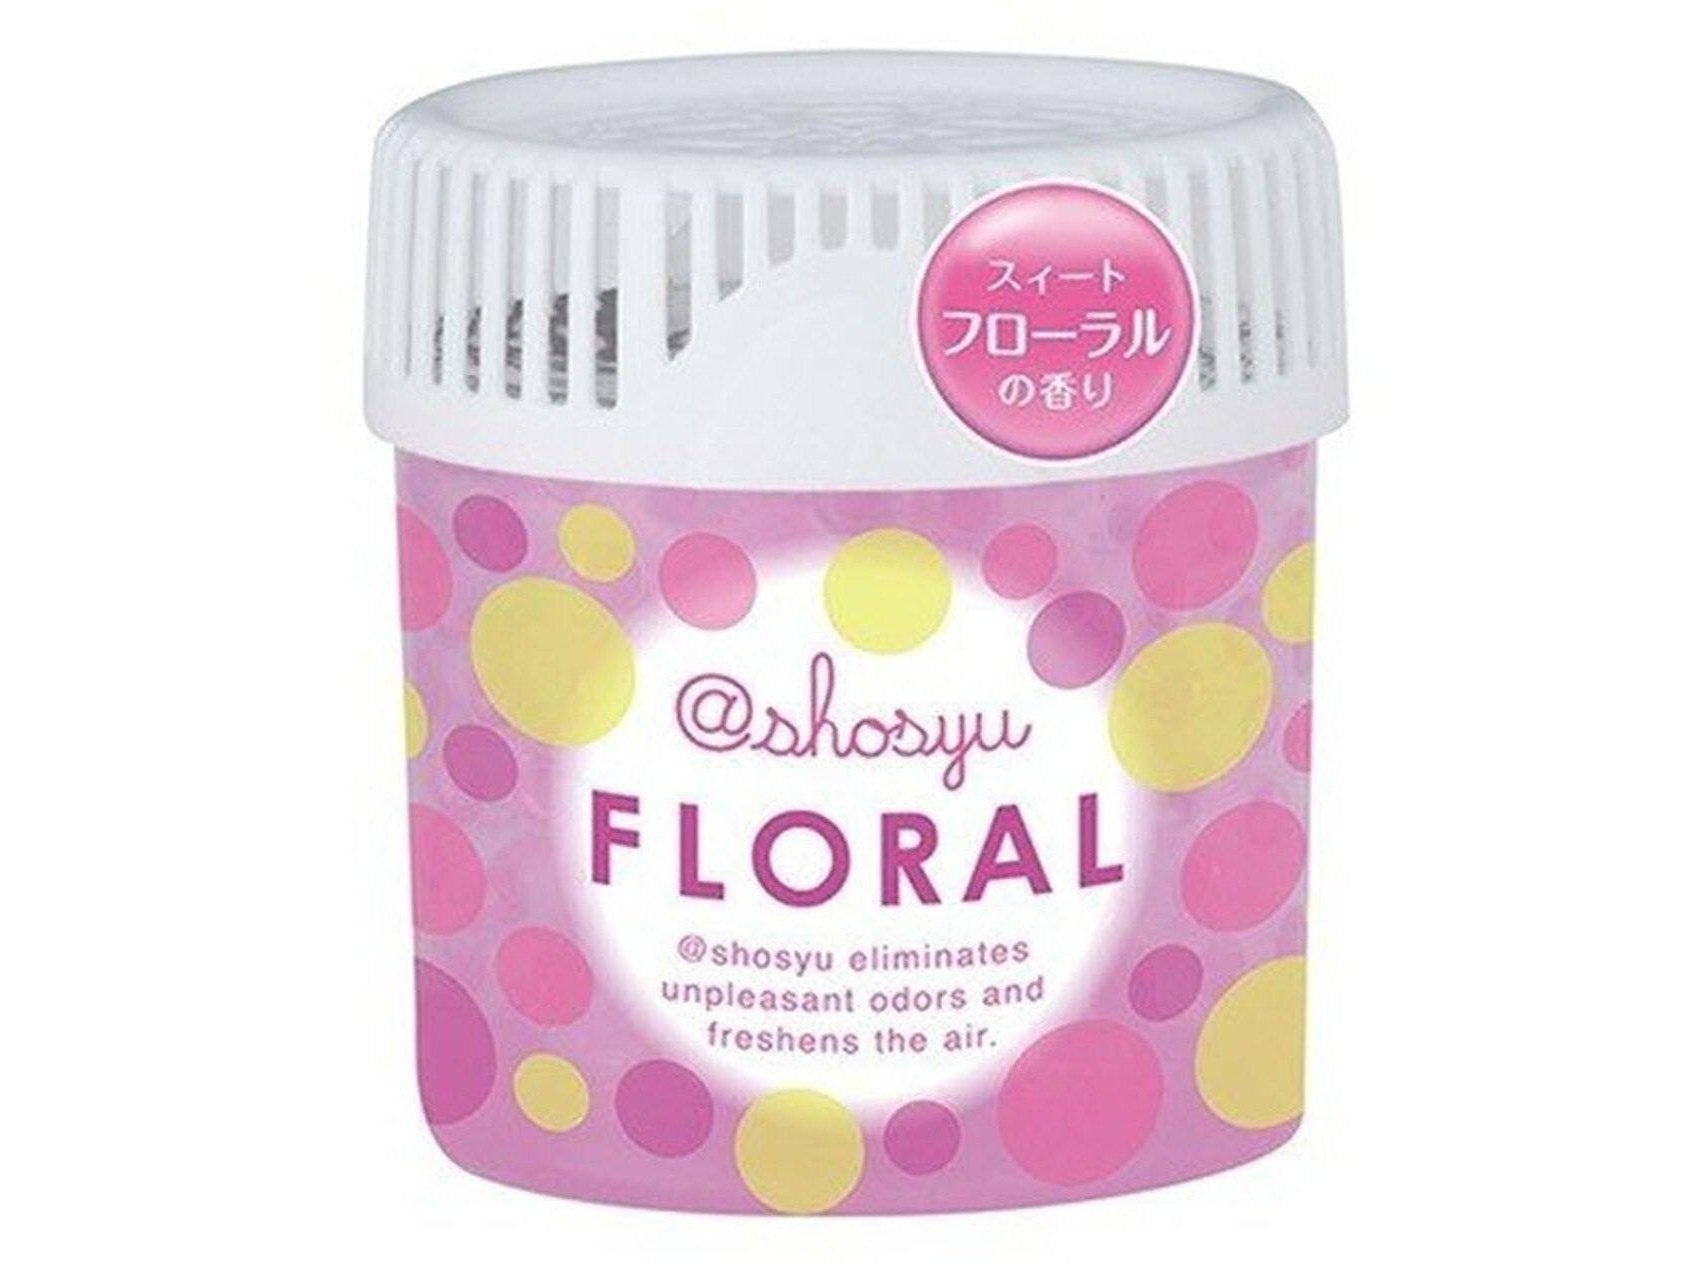 Kokubo Shosyu Room Deodorizer Floral